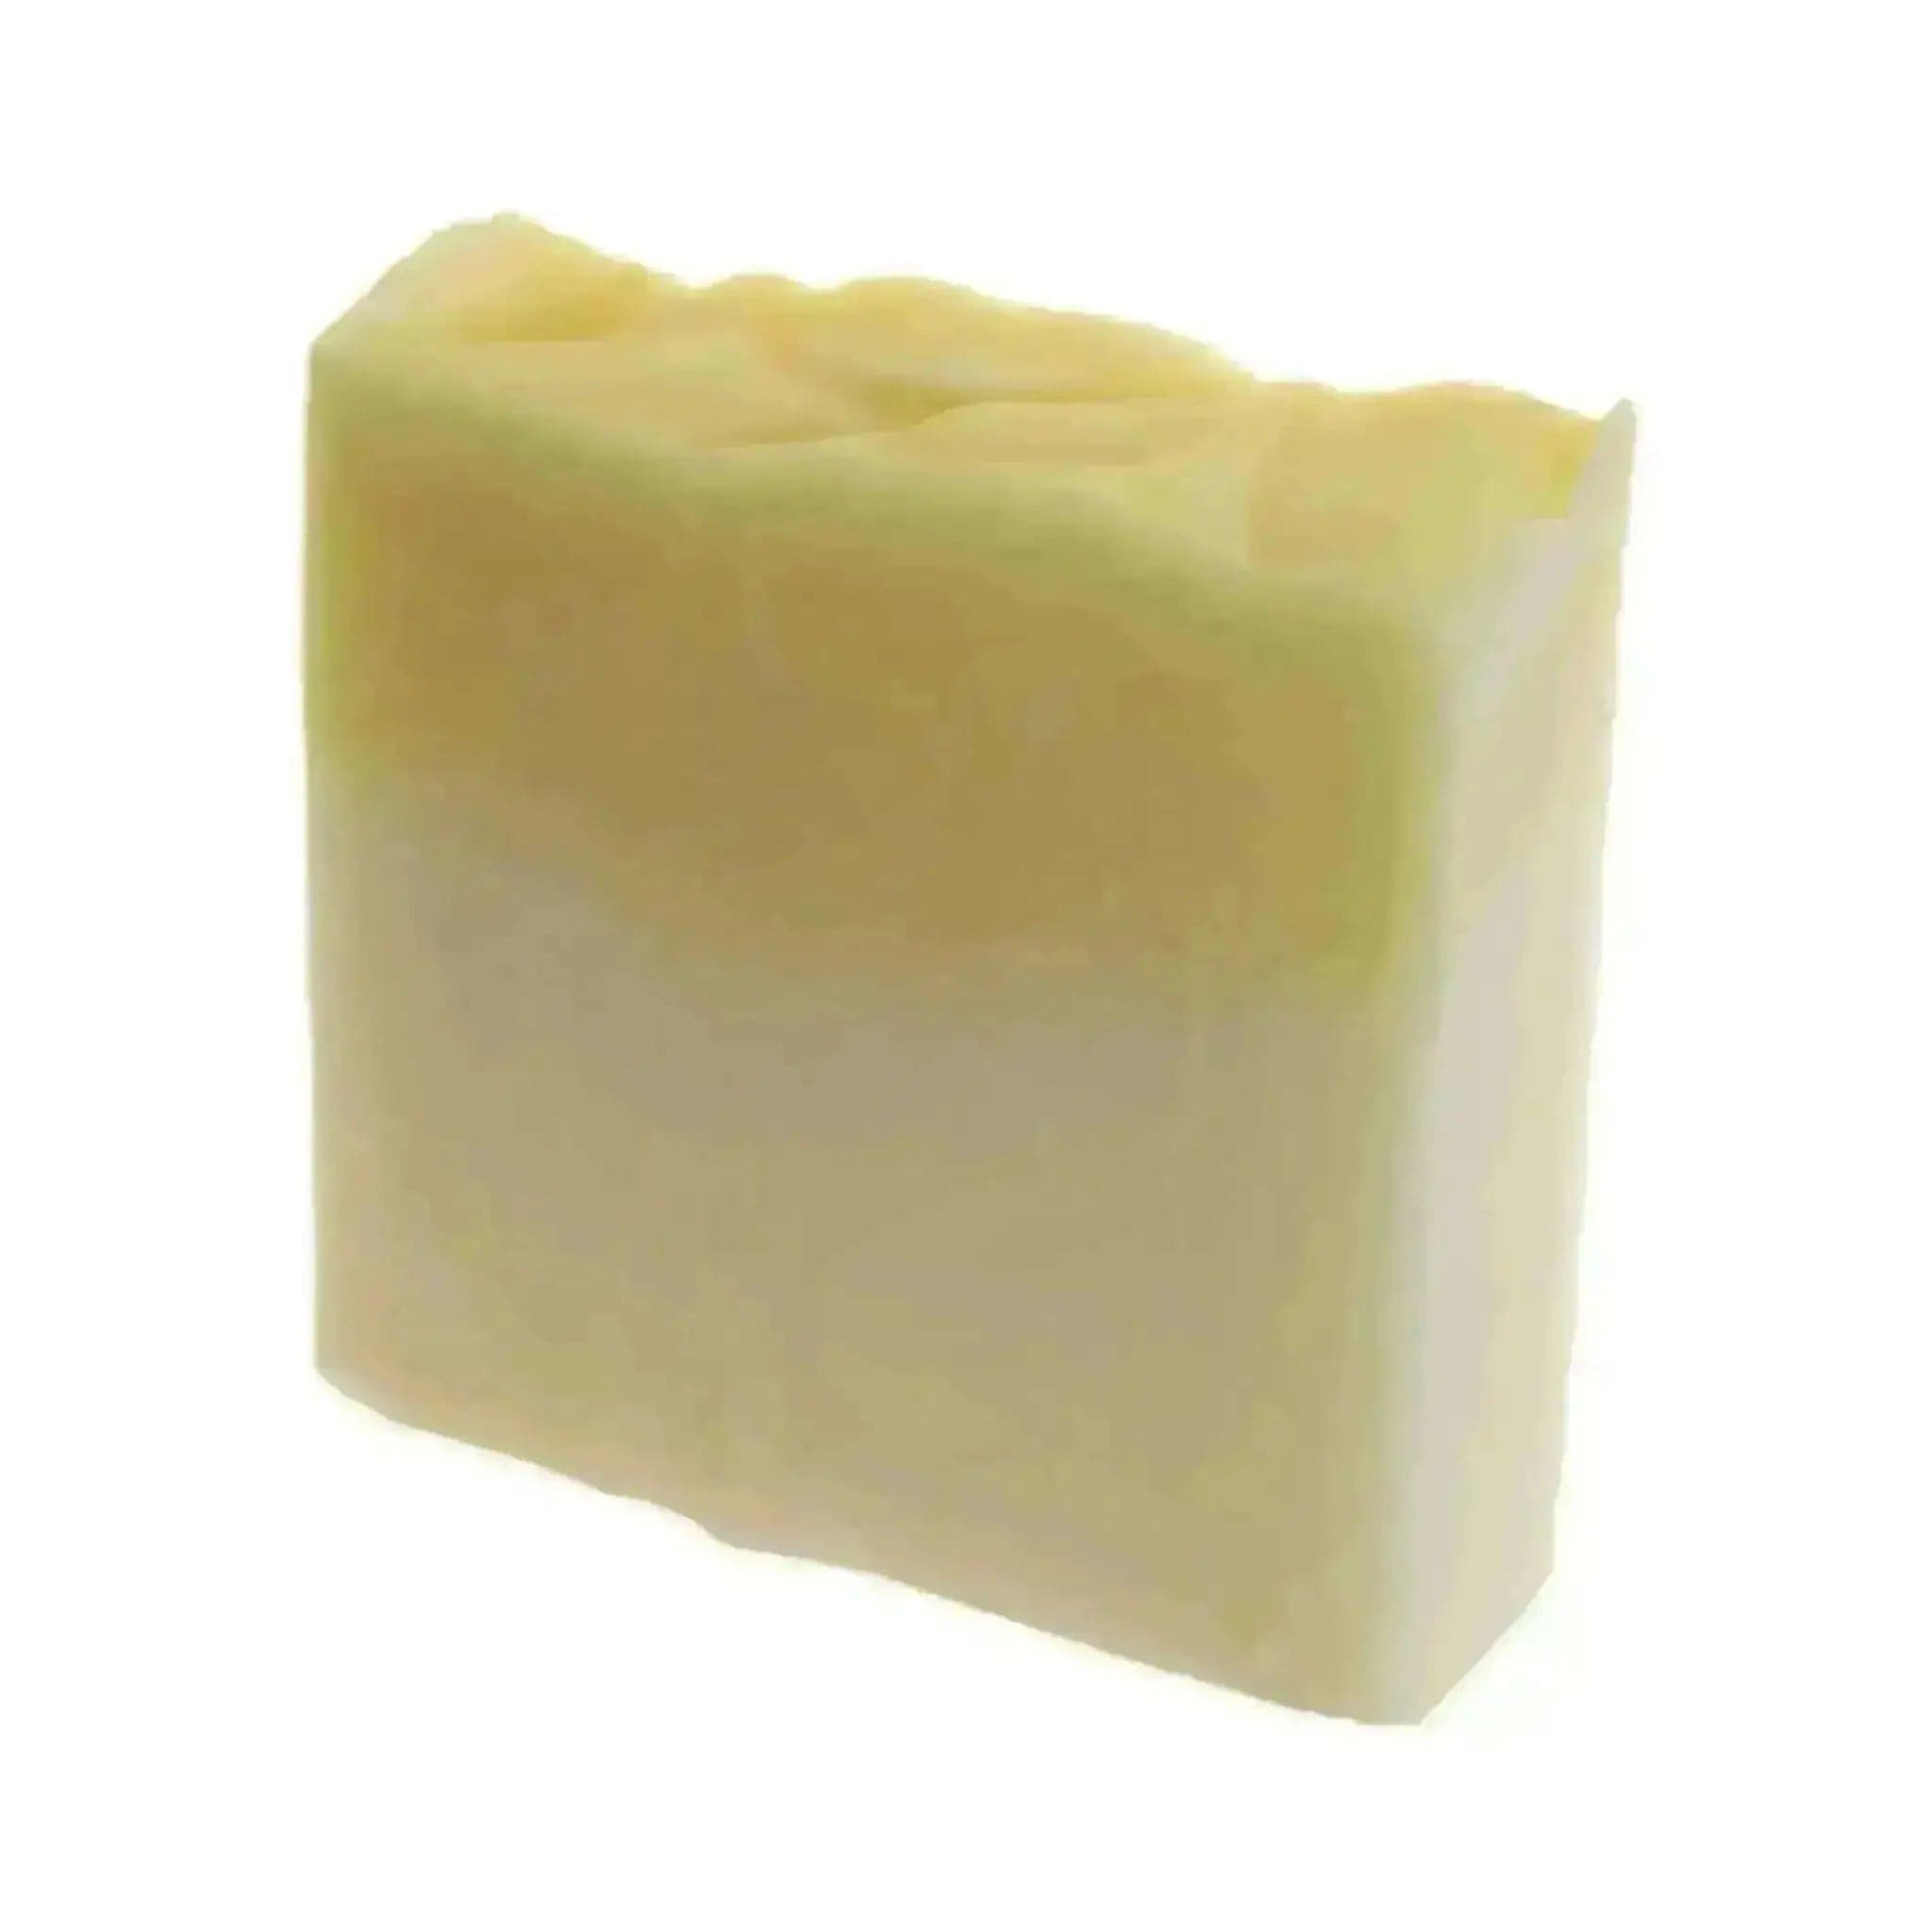 Scalp & Body Soap - Image #1